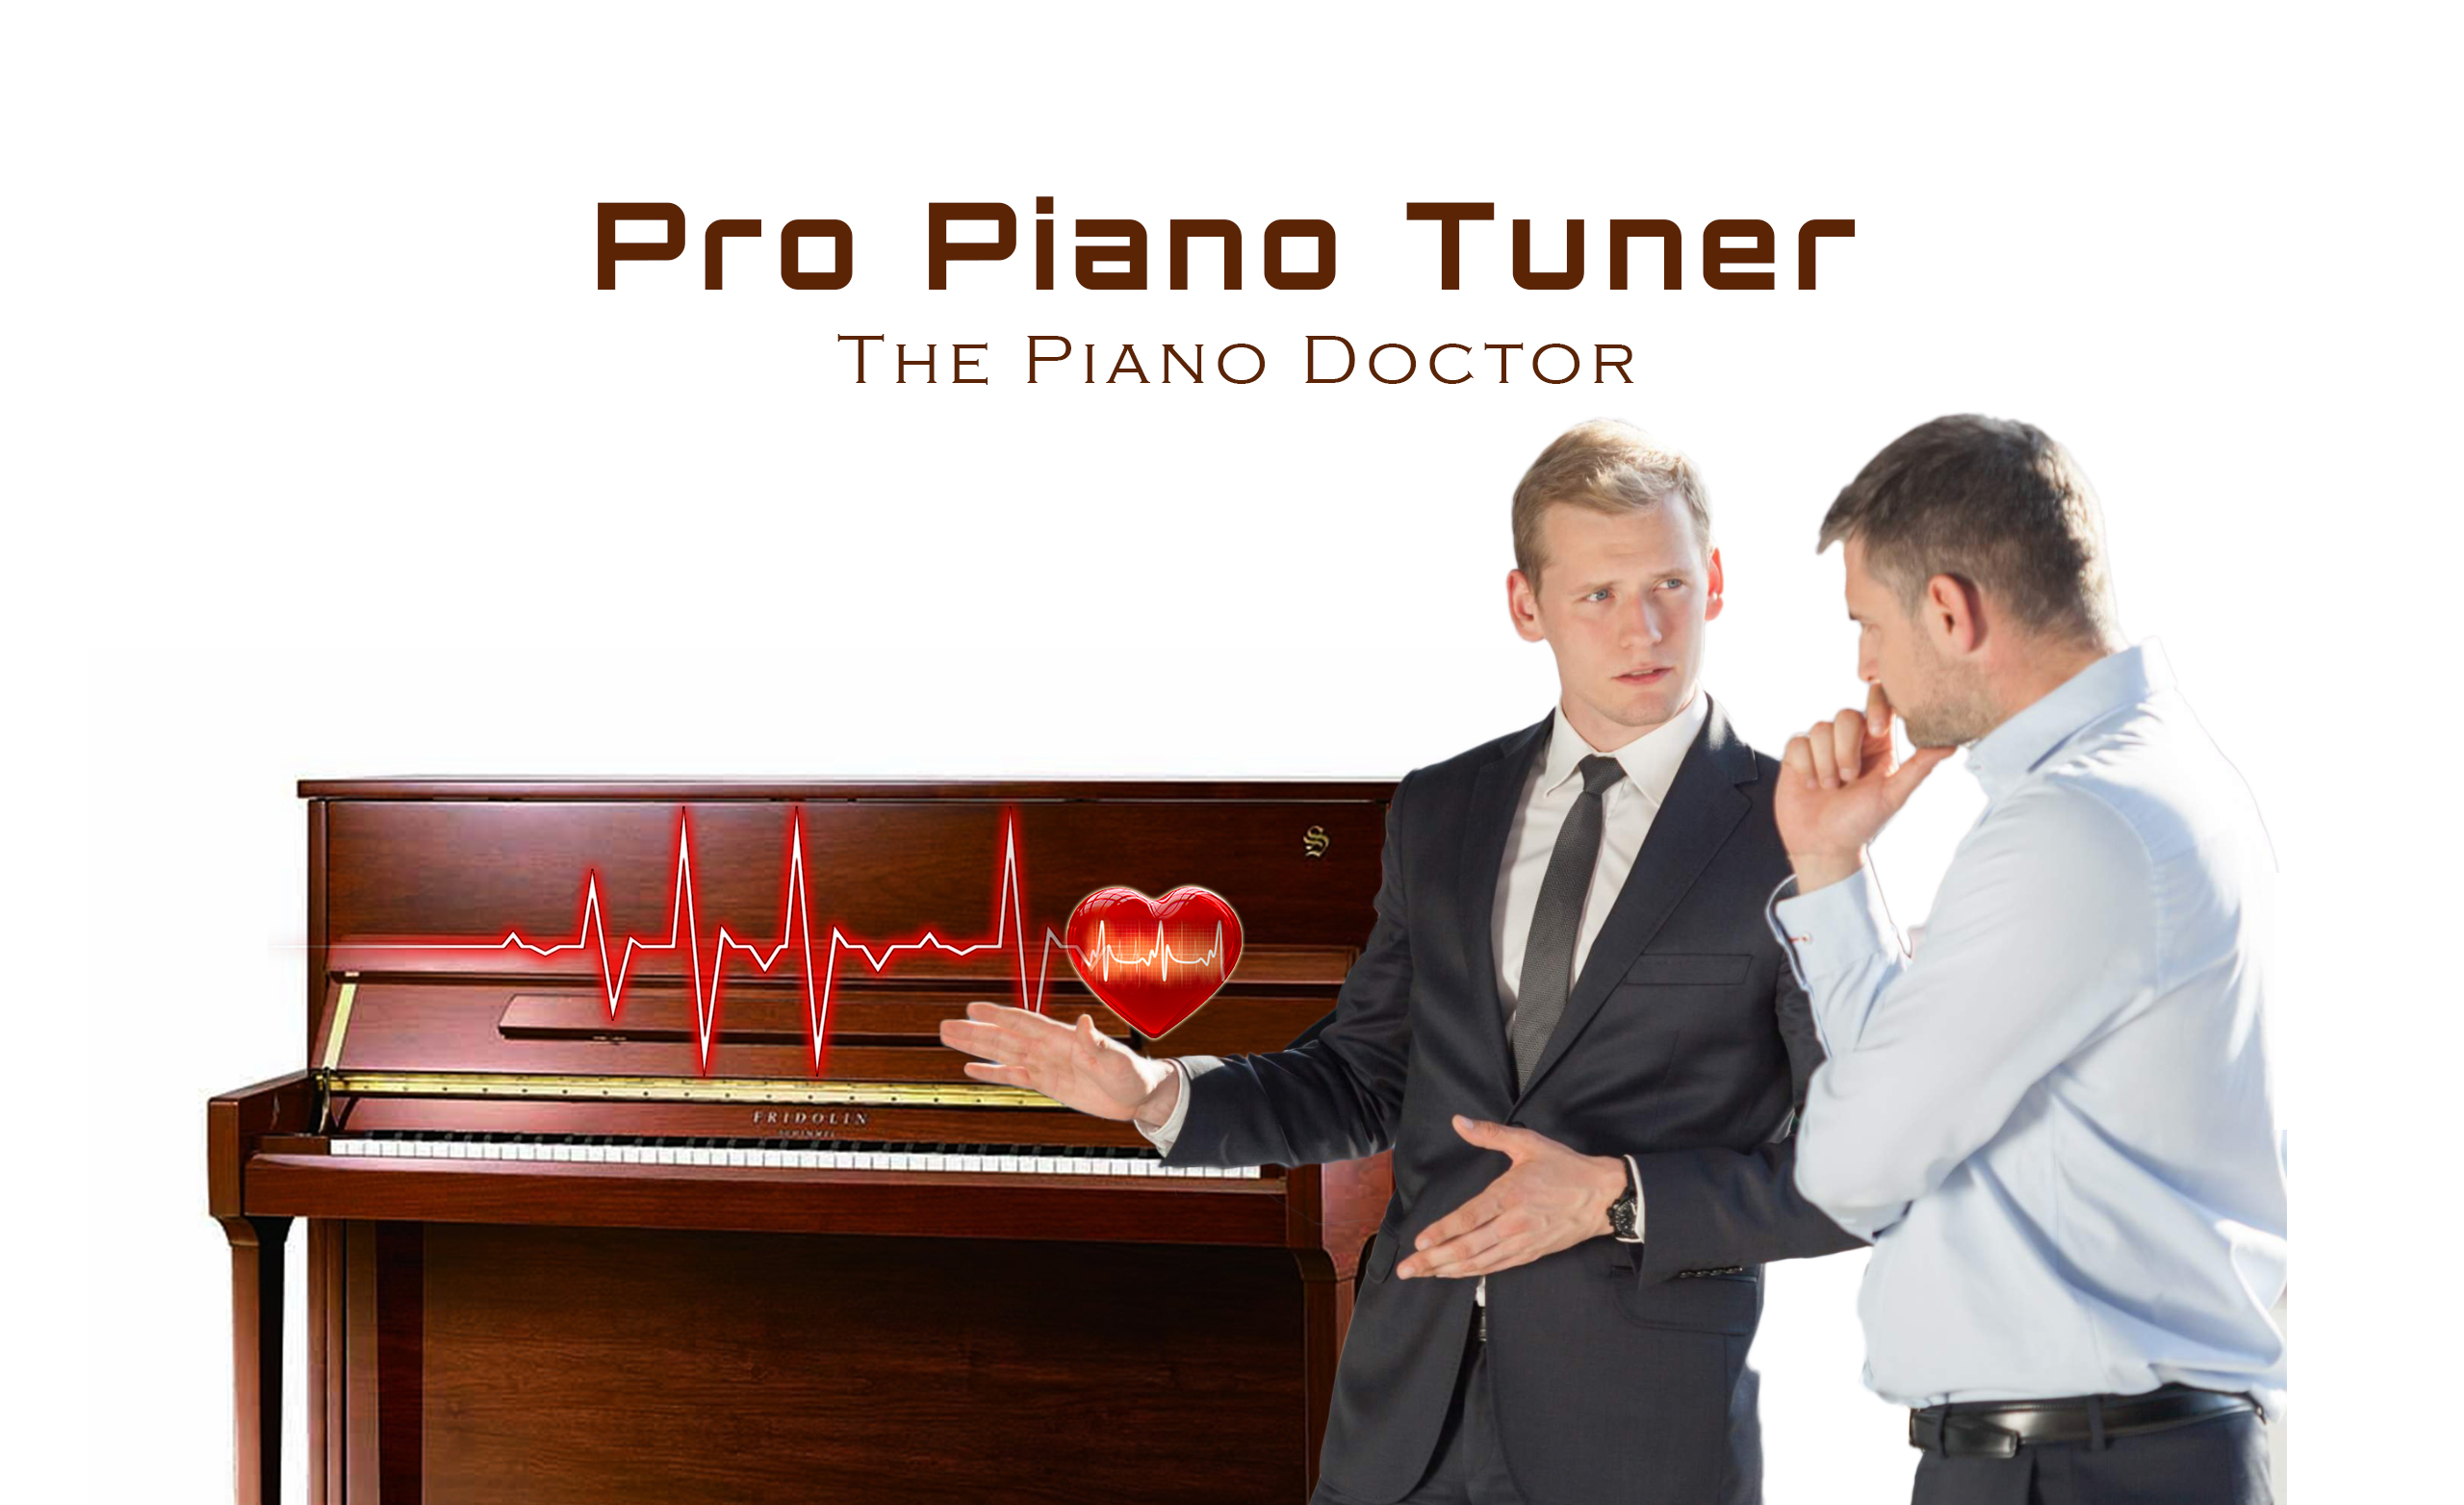 Pro Piano Tuner